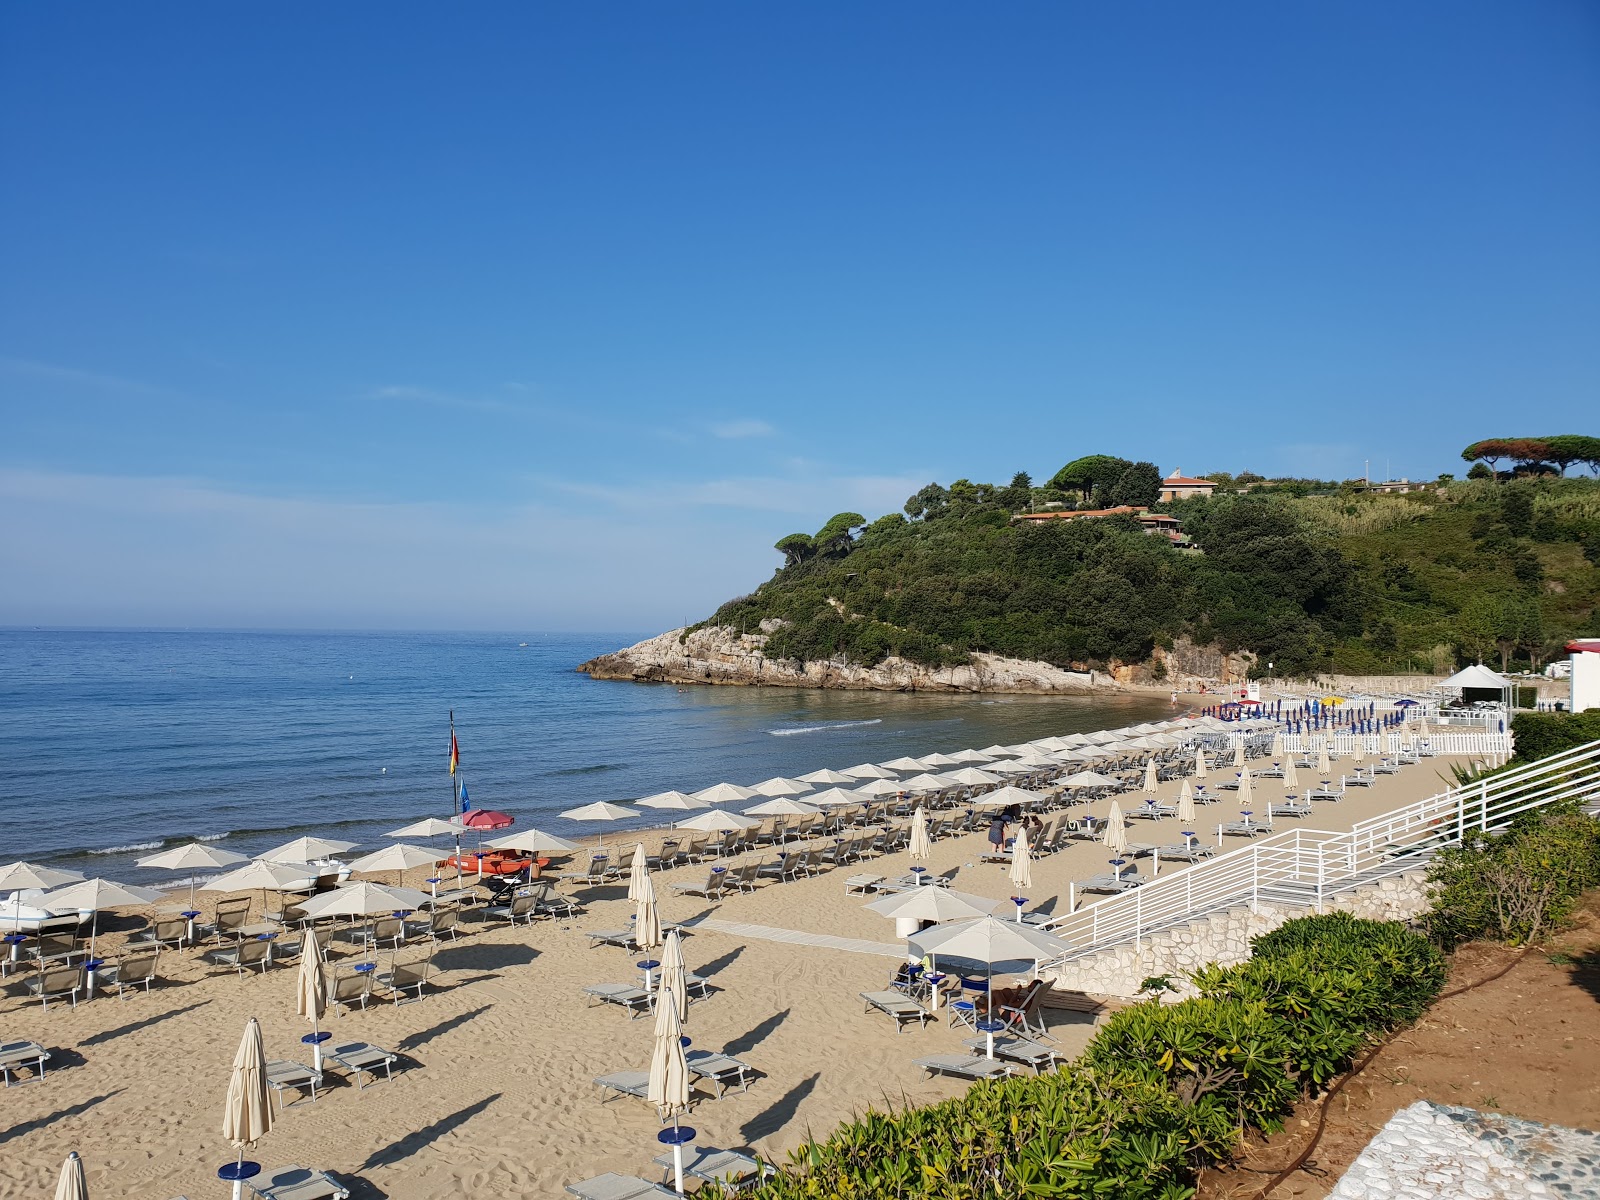 Spiaggia dell'Ariana'in fotoğrafı i̇nce kahverengi kum yüzey ile